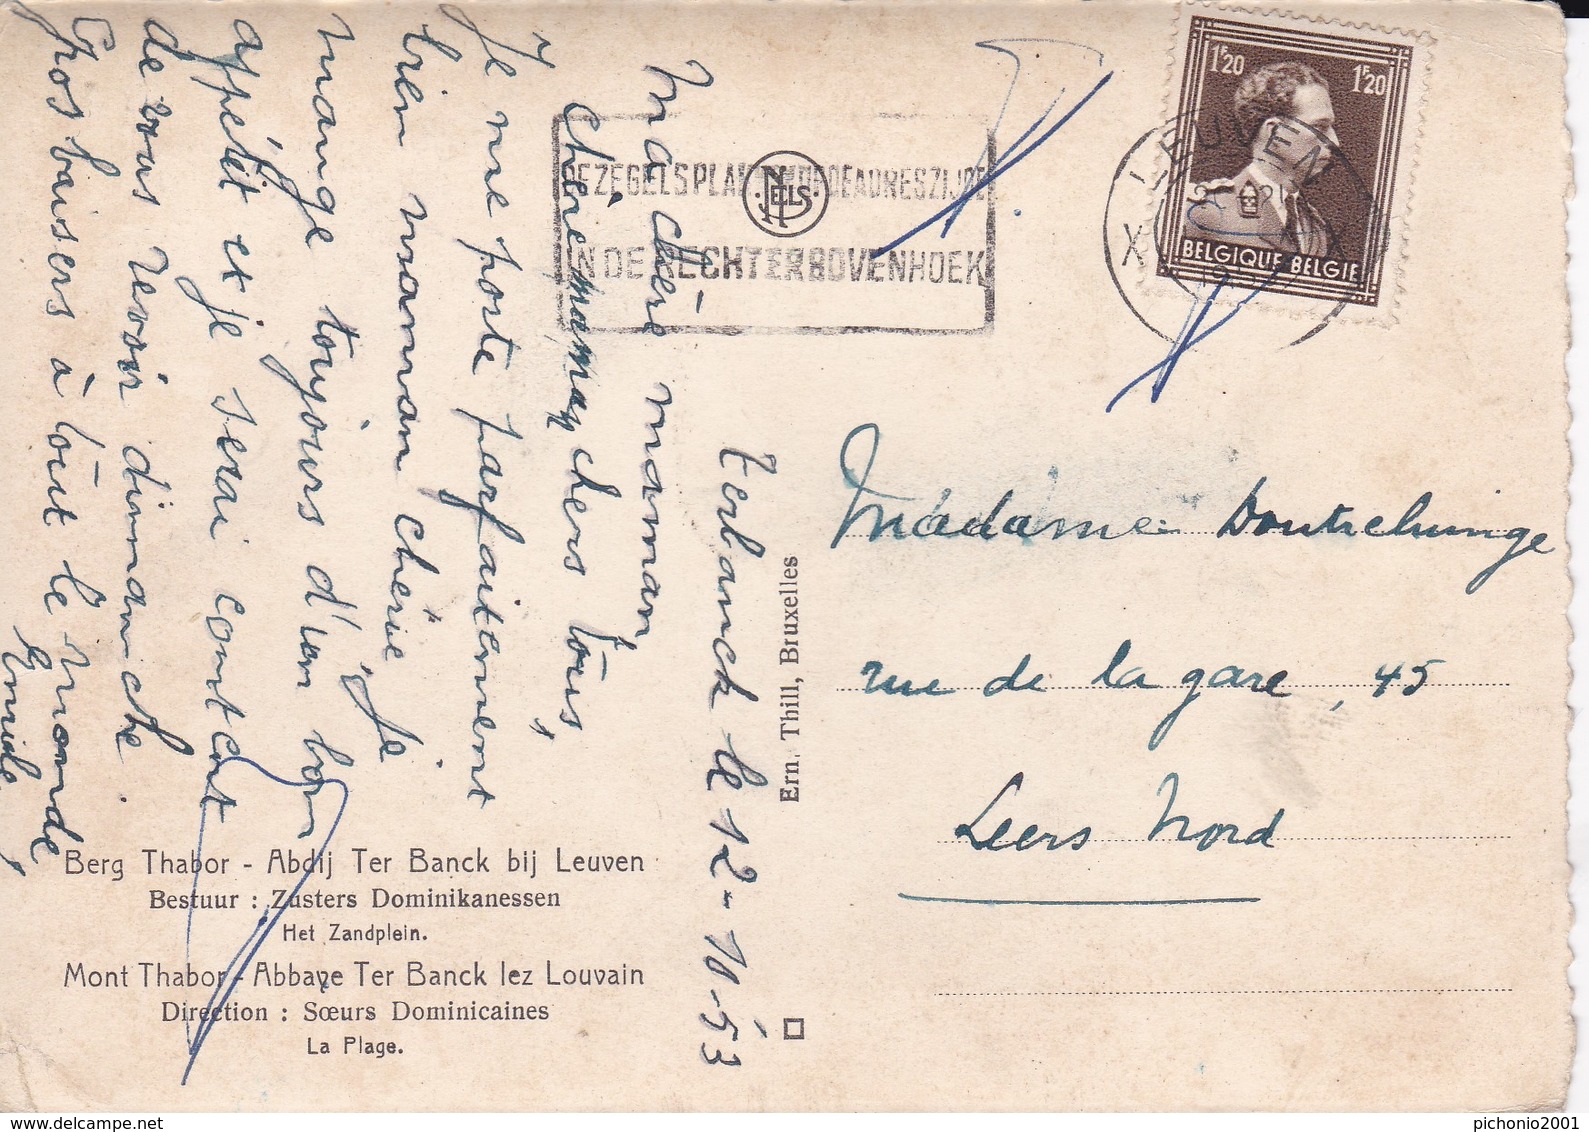 MONT THABOR - Abbaye Ter Blanck lez Louvain  -  Lot de 9 Cartes Postales